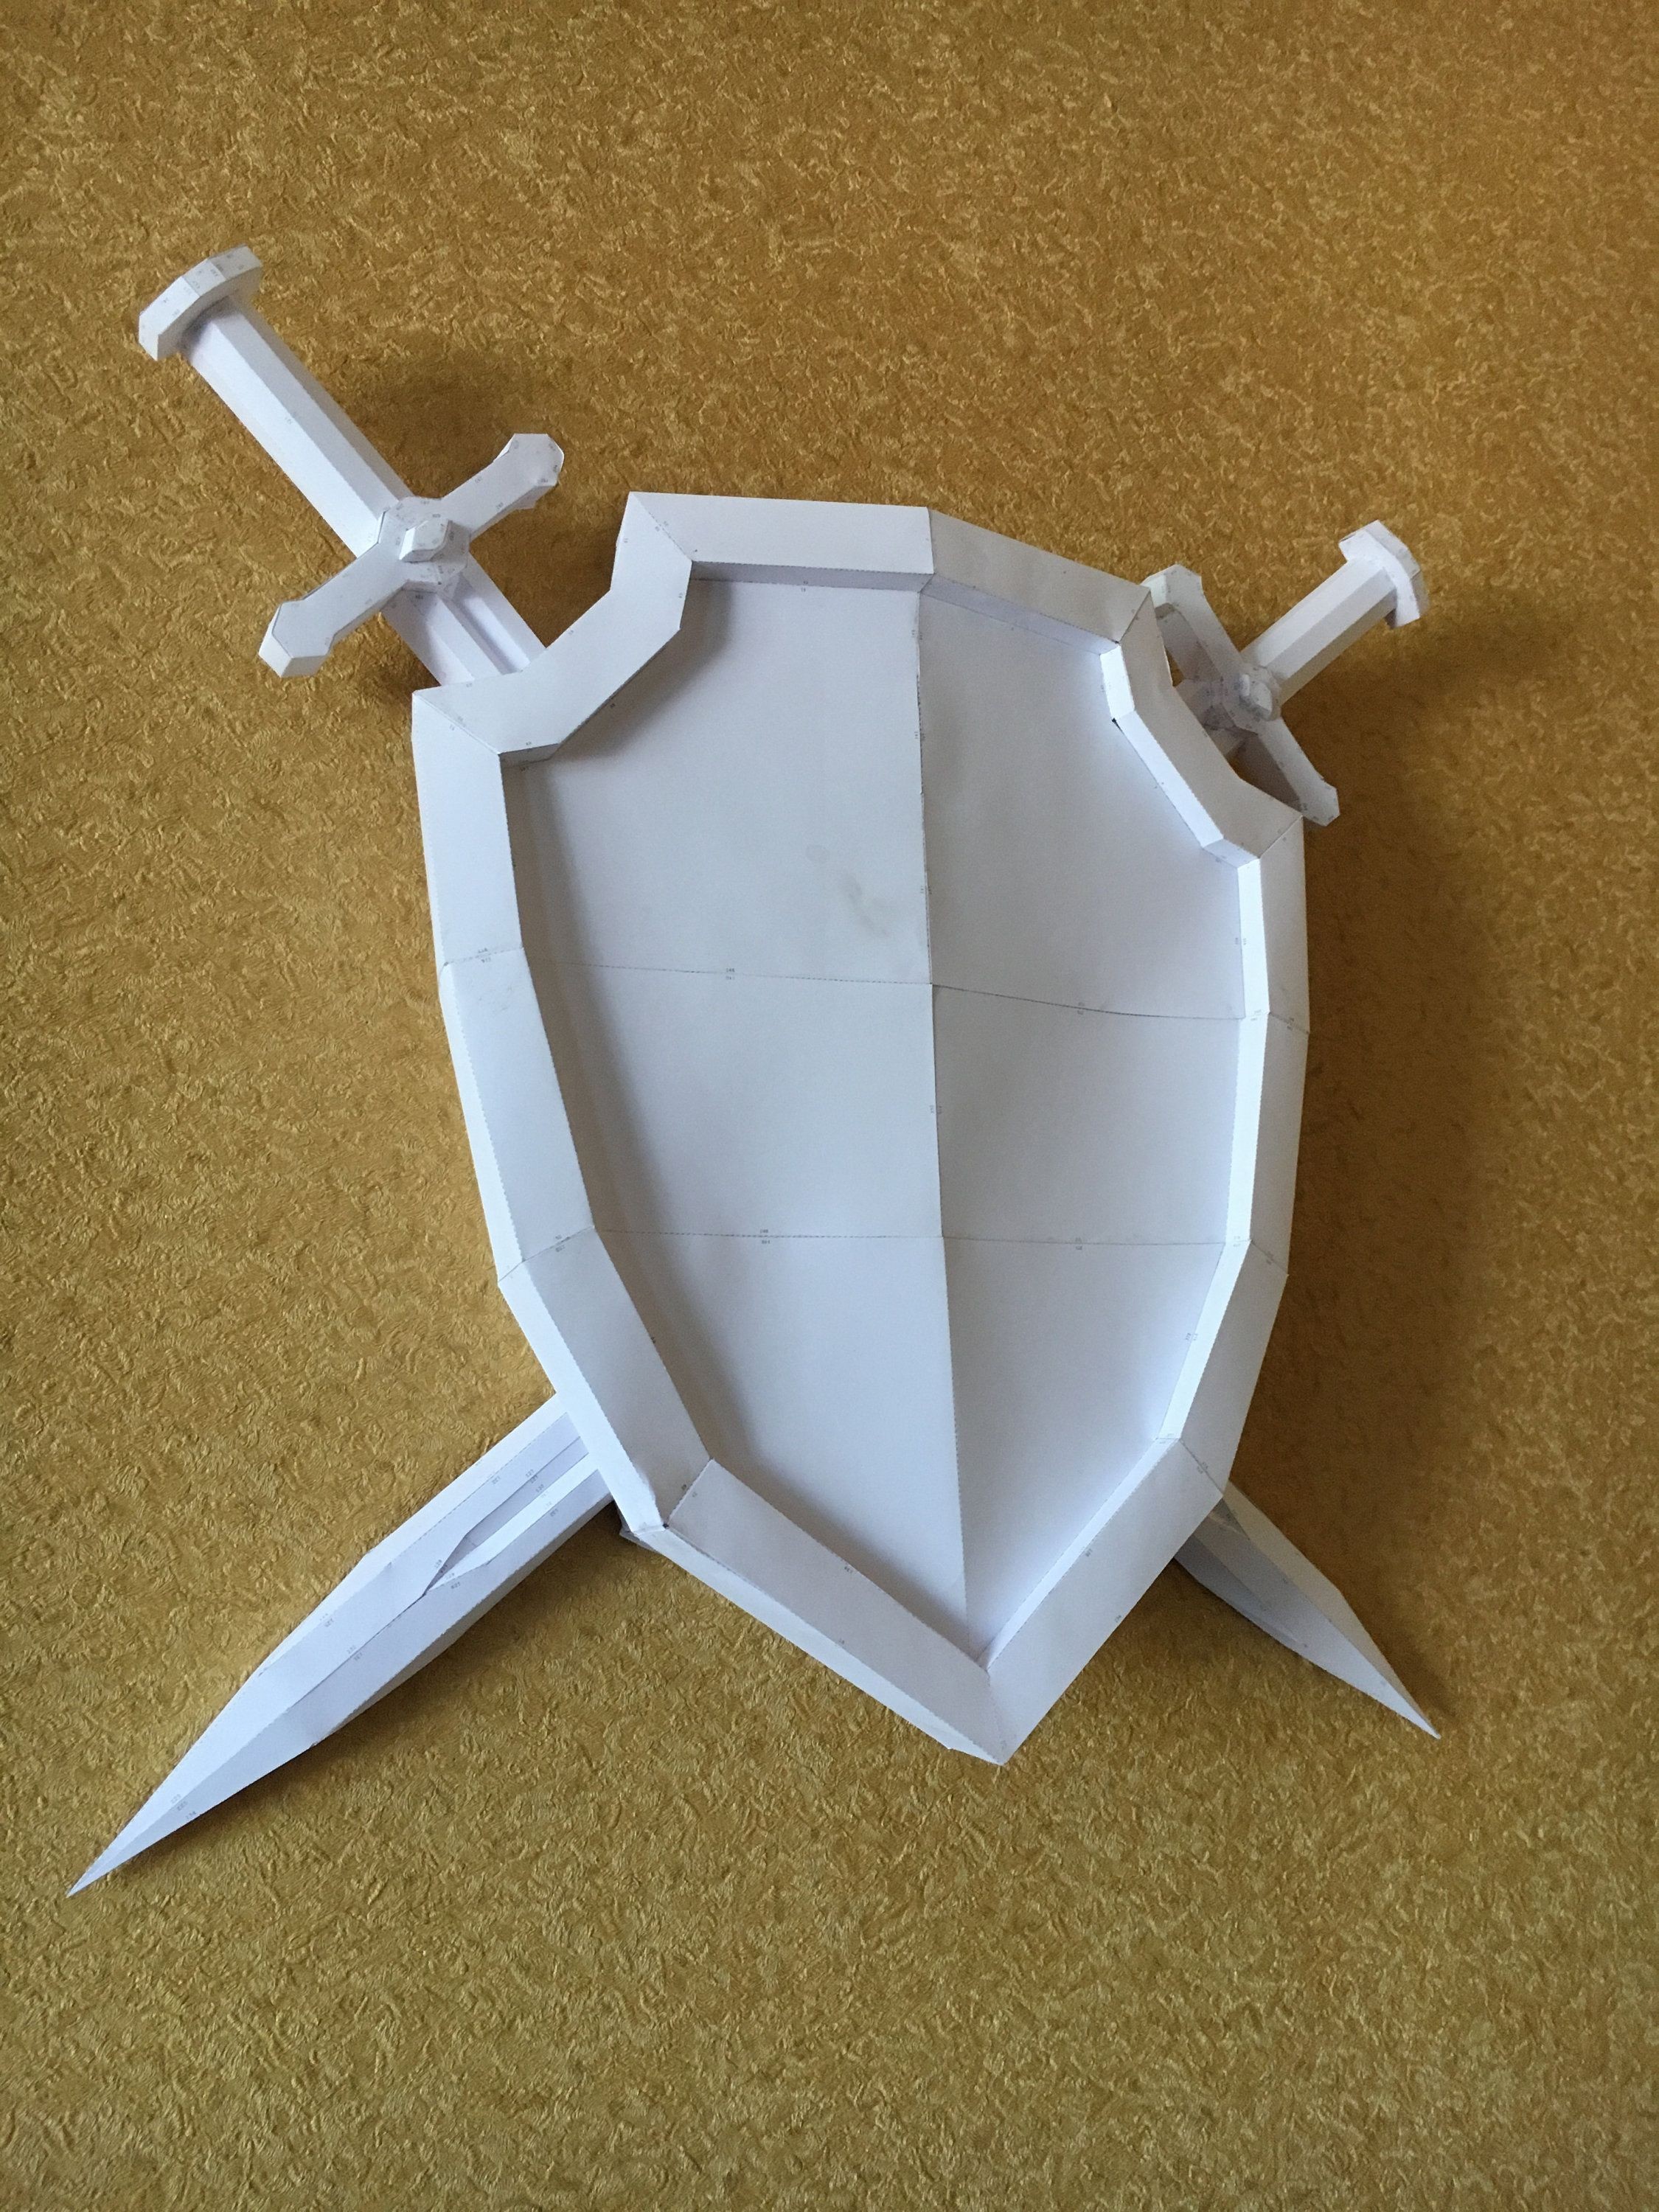 Fish Papercraft Sword Shield Diy Papercraft Model ÐÑÐ¼Ð°Ð¶Ð½ÑÐµ Ð¸Ð·Ð´ÐµÐ Ð¸Ñ